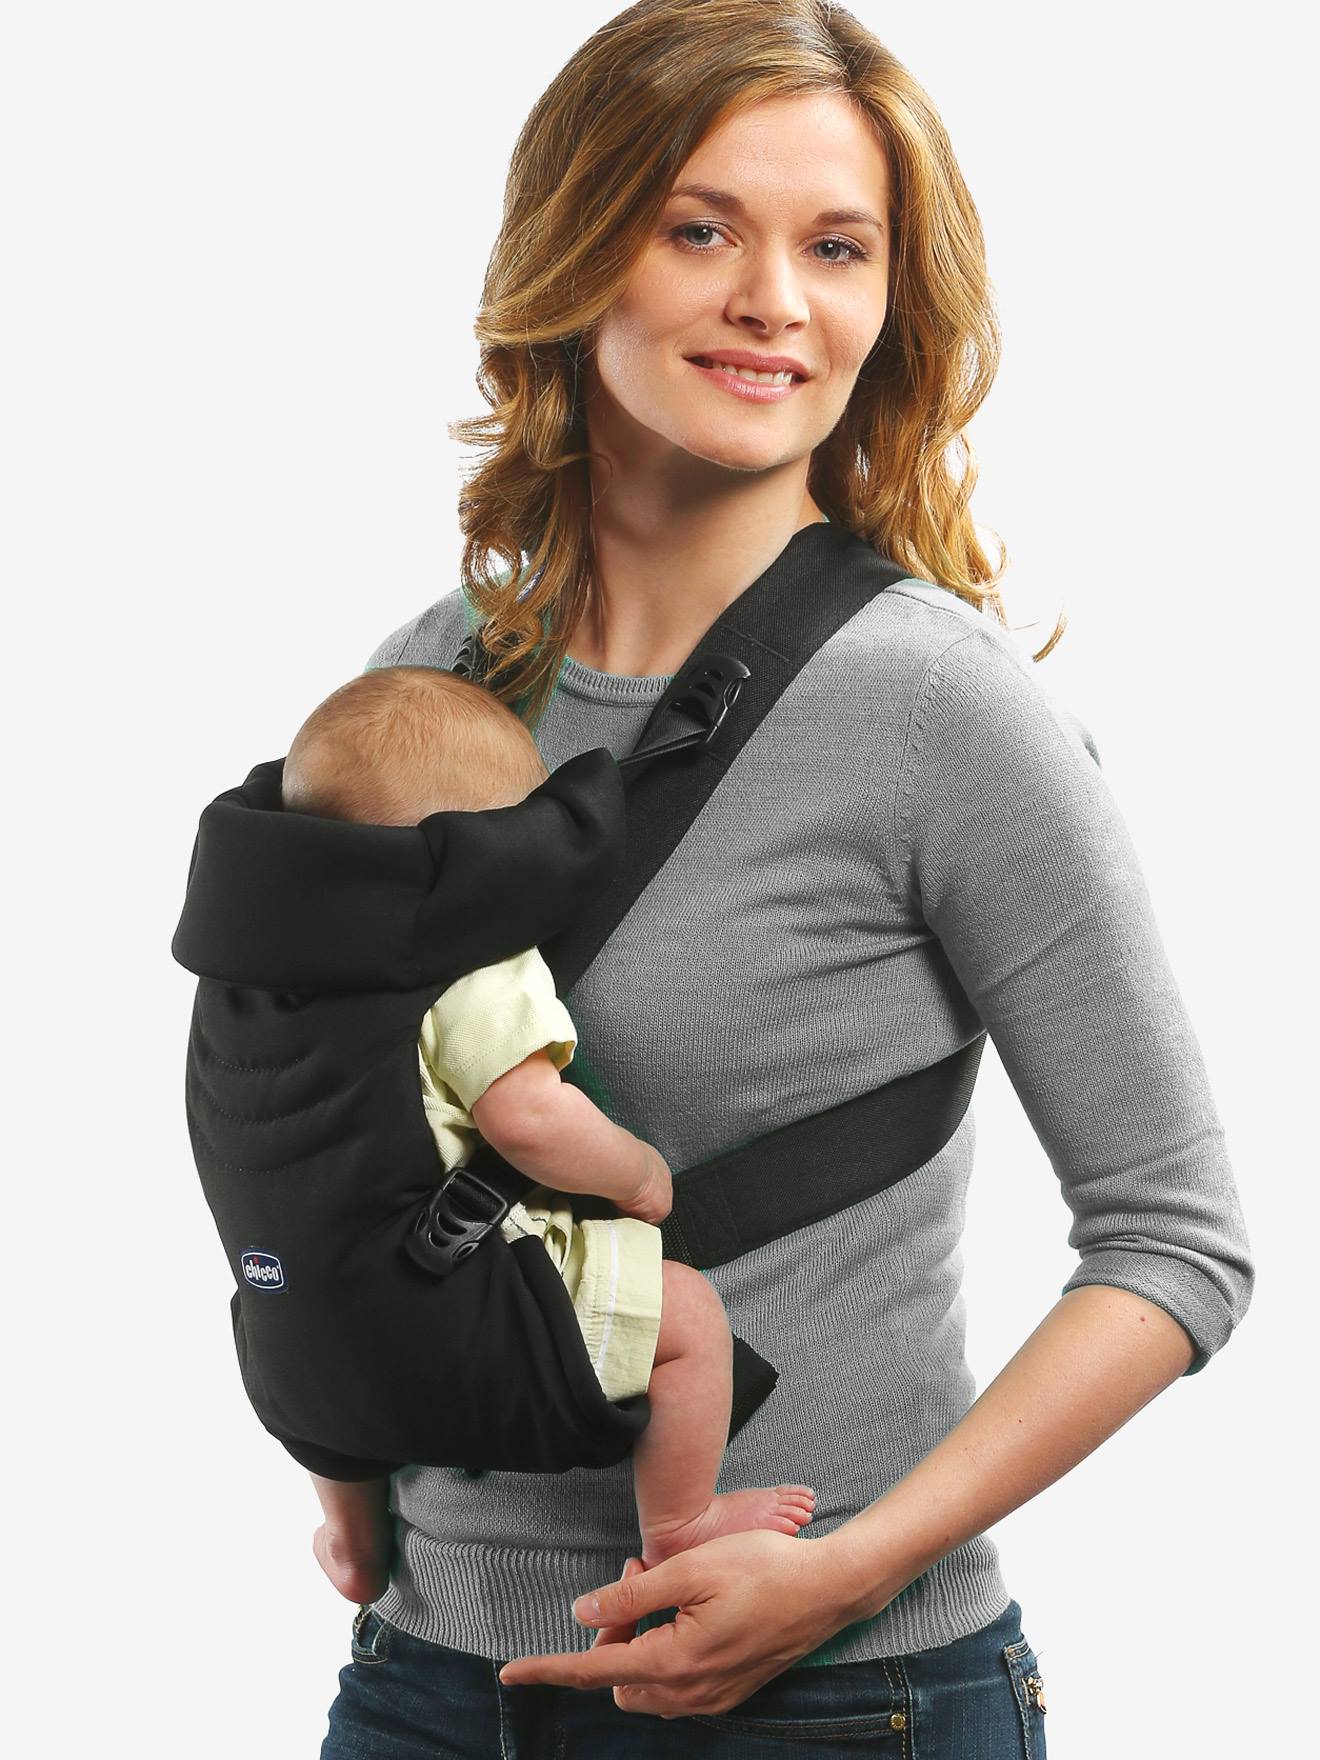 Porte-bébé ergonomique 4 Position - Chicco